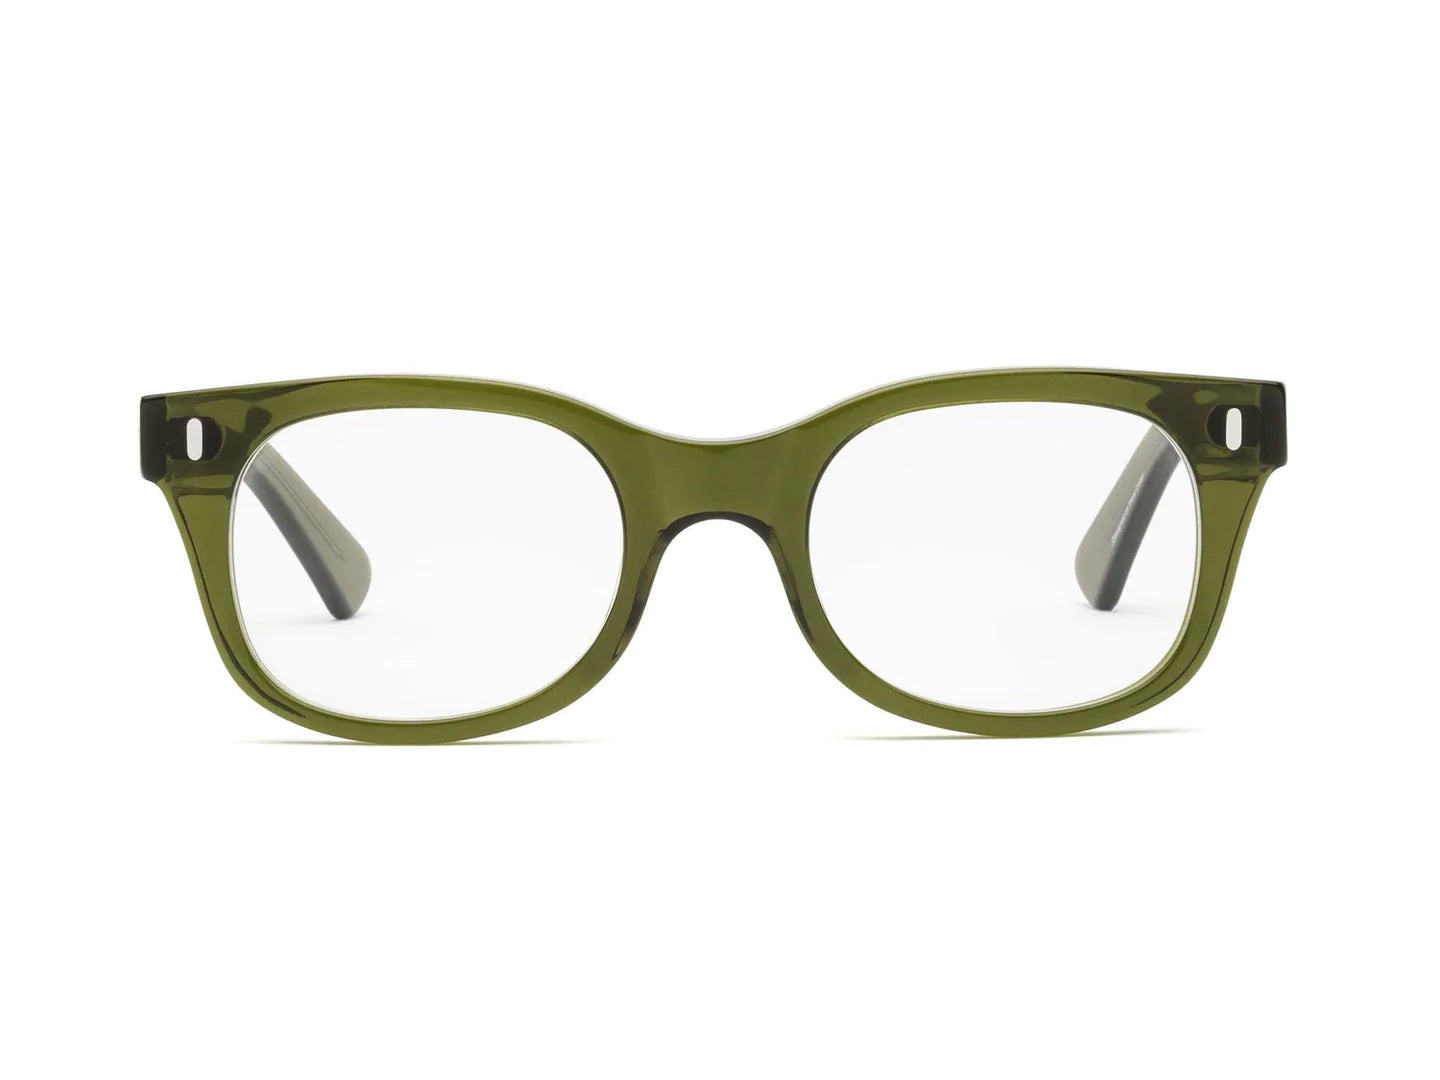 CADDIS Bixby Reading Glasses - Heritage Green